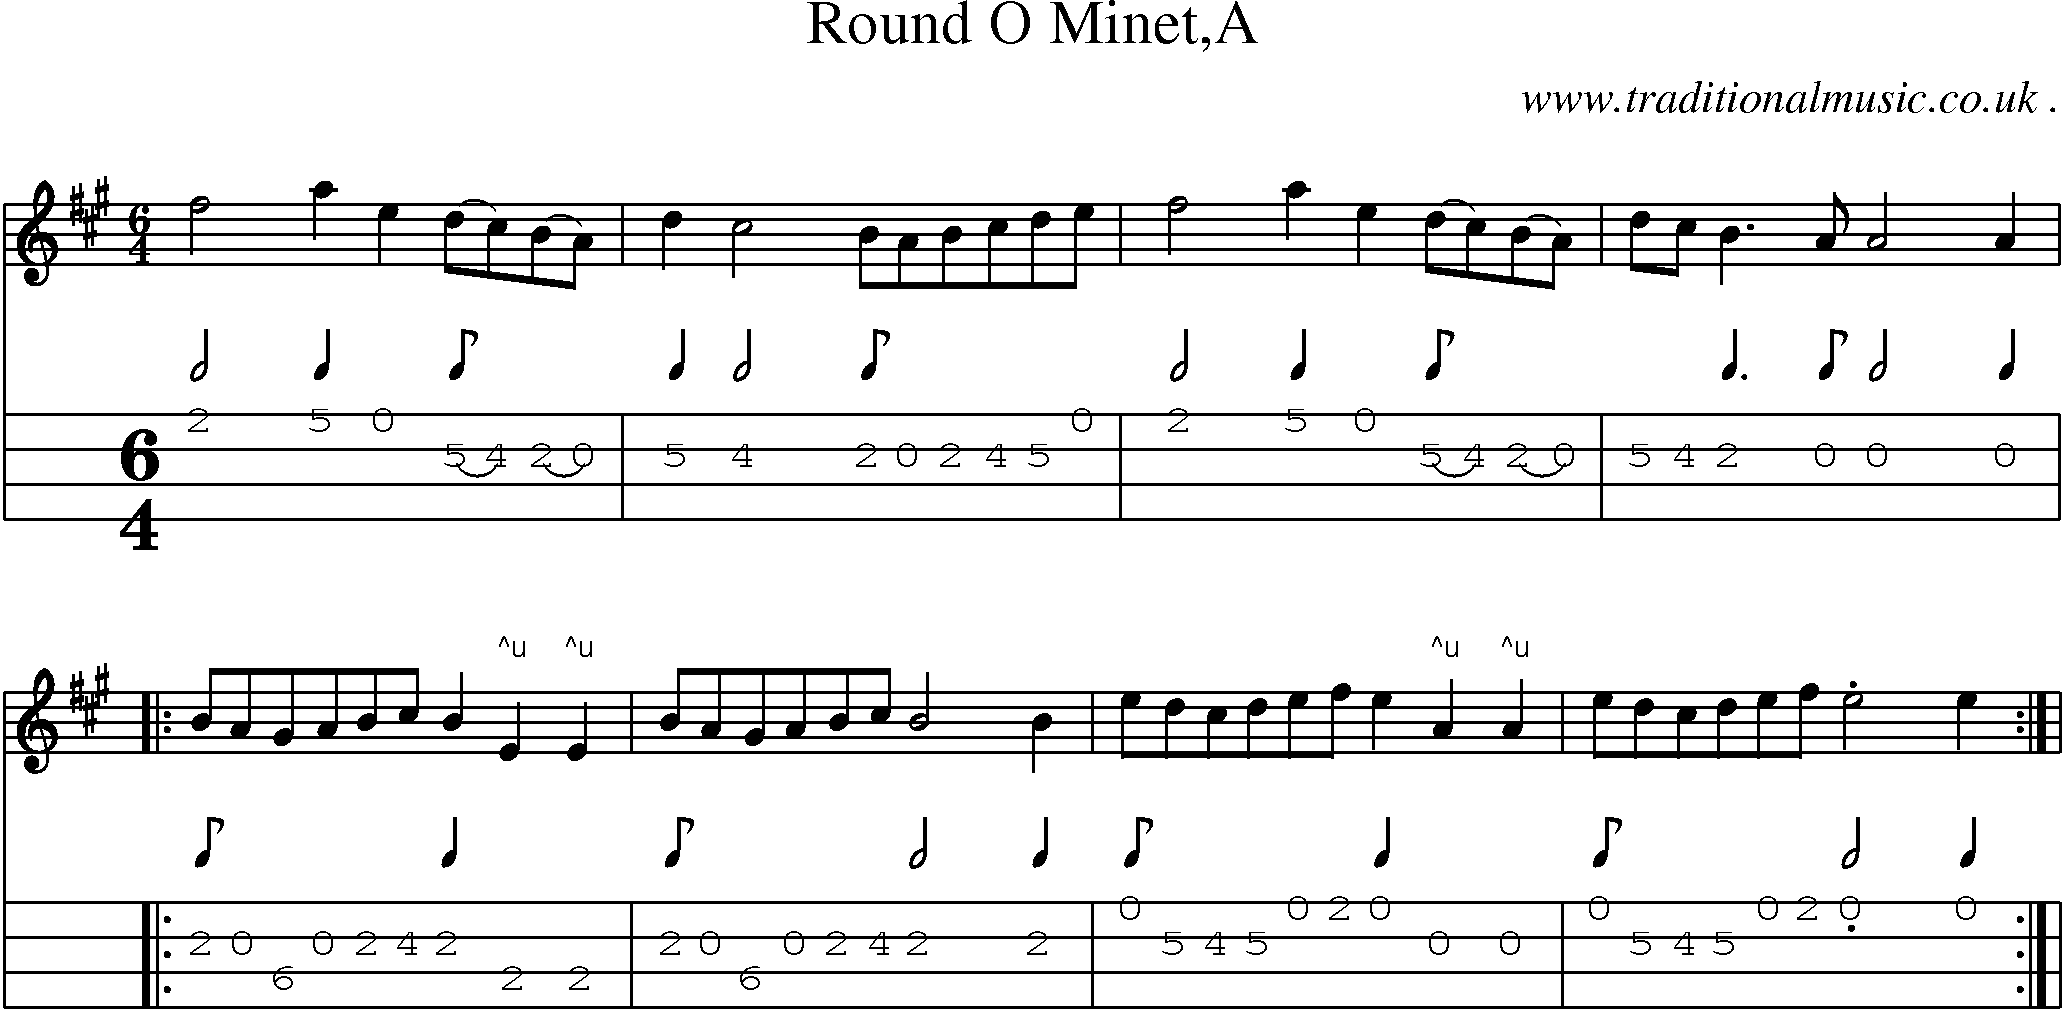 Sheet-Music and Mandolin Tabs for Round O Mineta